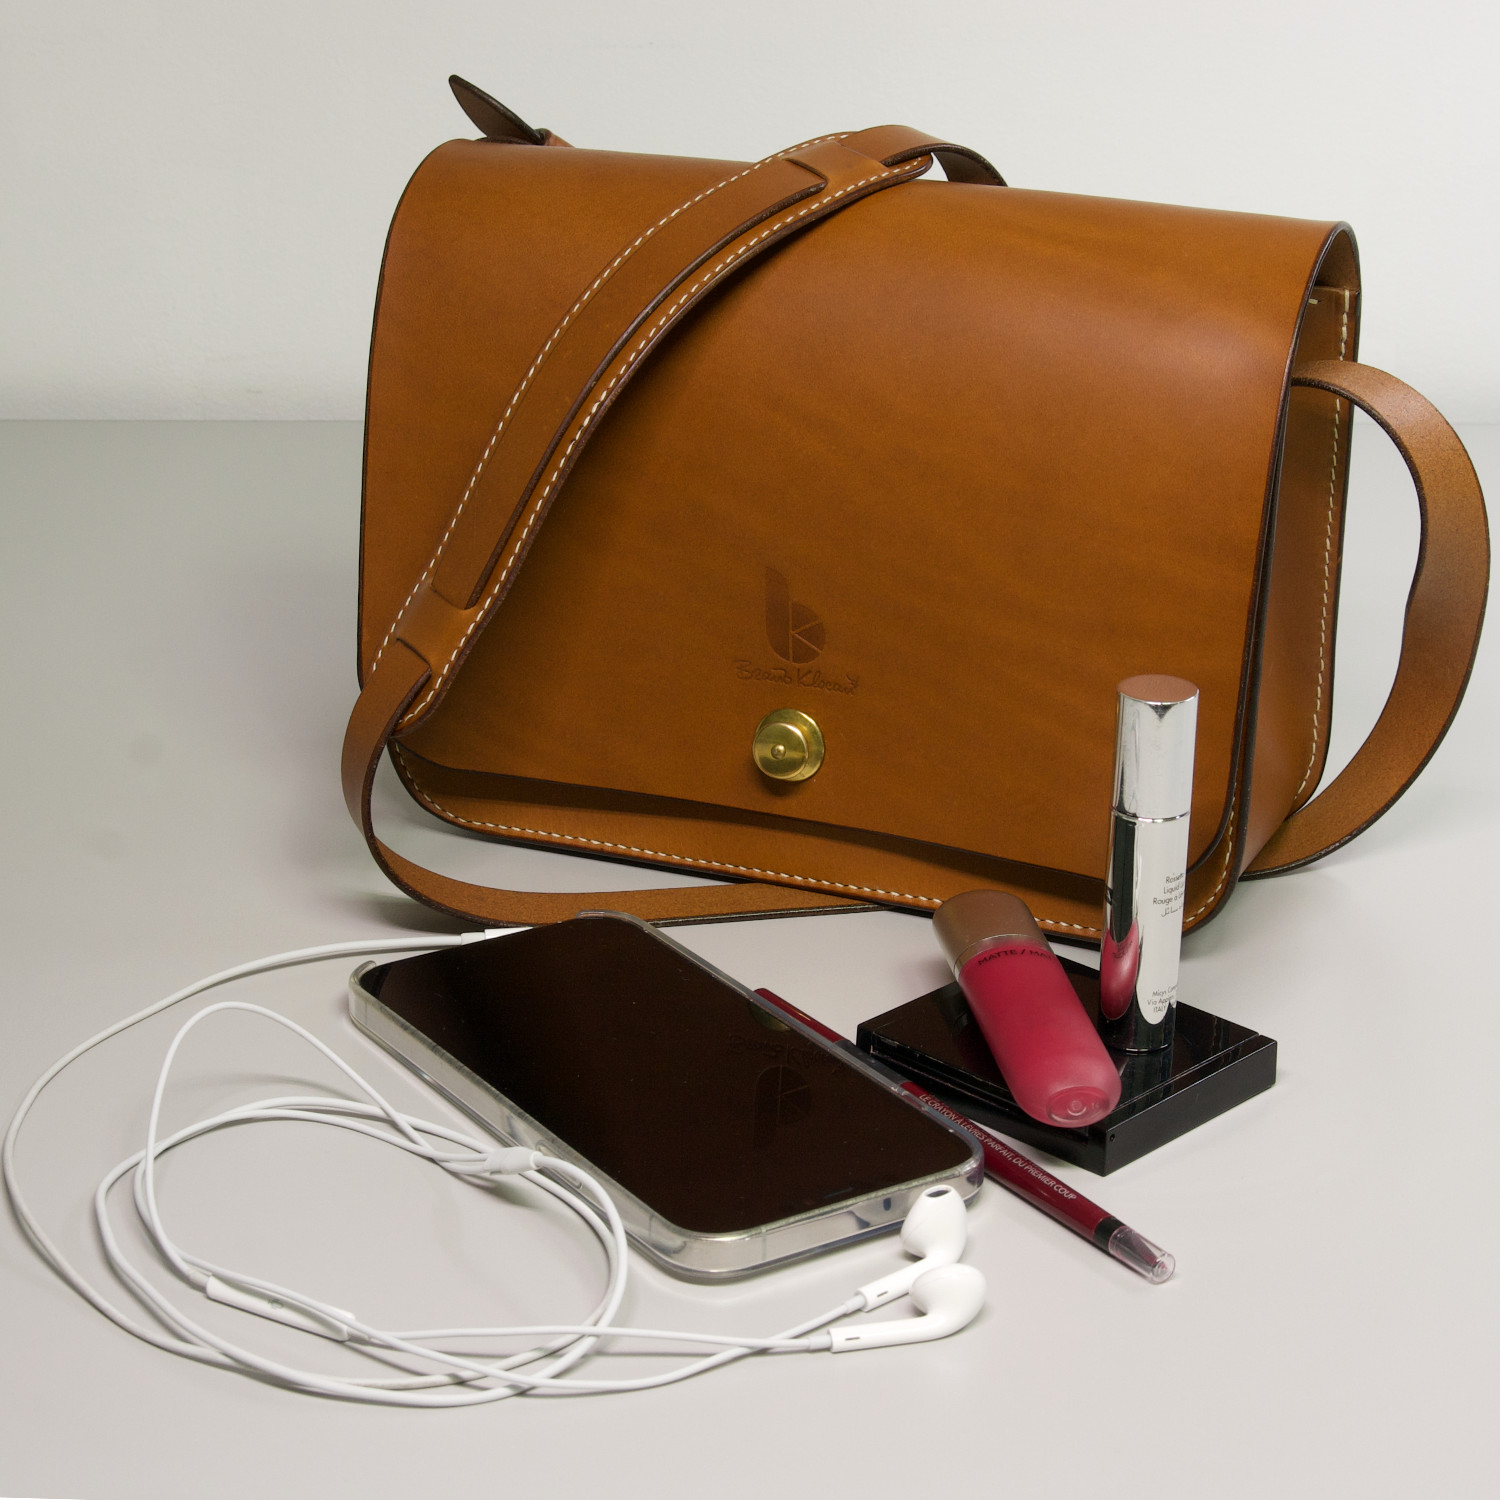 leather crossbody handbag with make up headphones and mobile